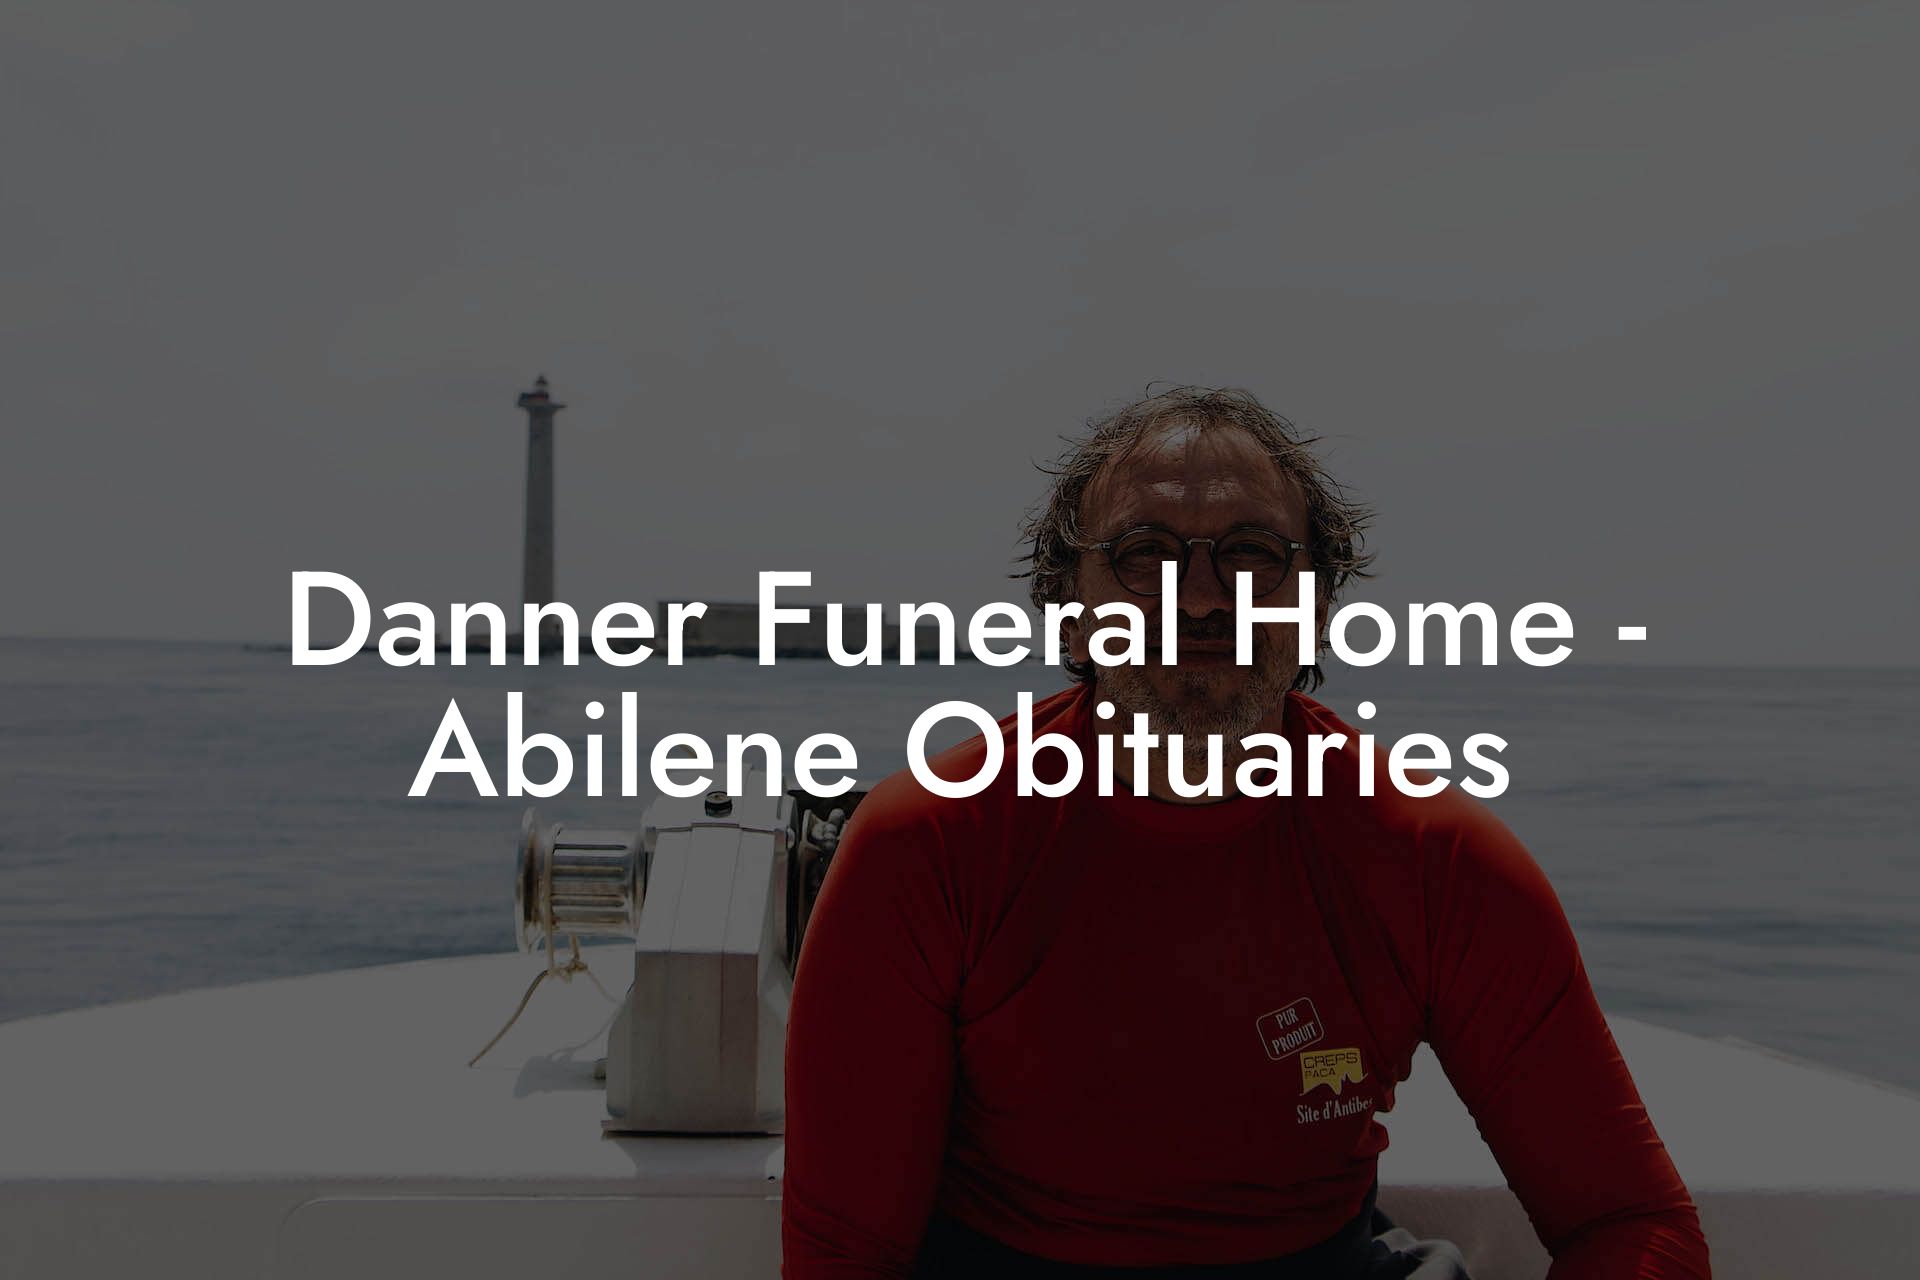 Danner Funeral Home - Abilene Obituaries